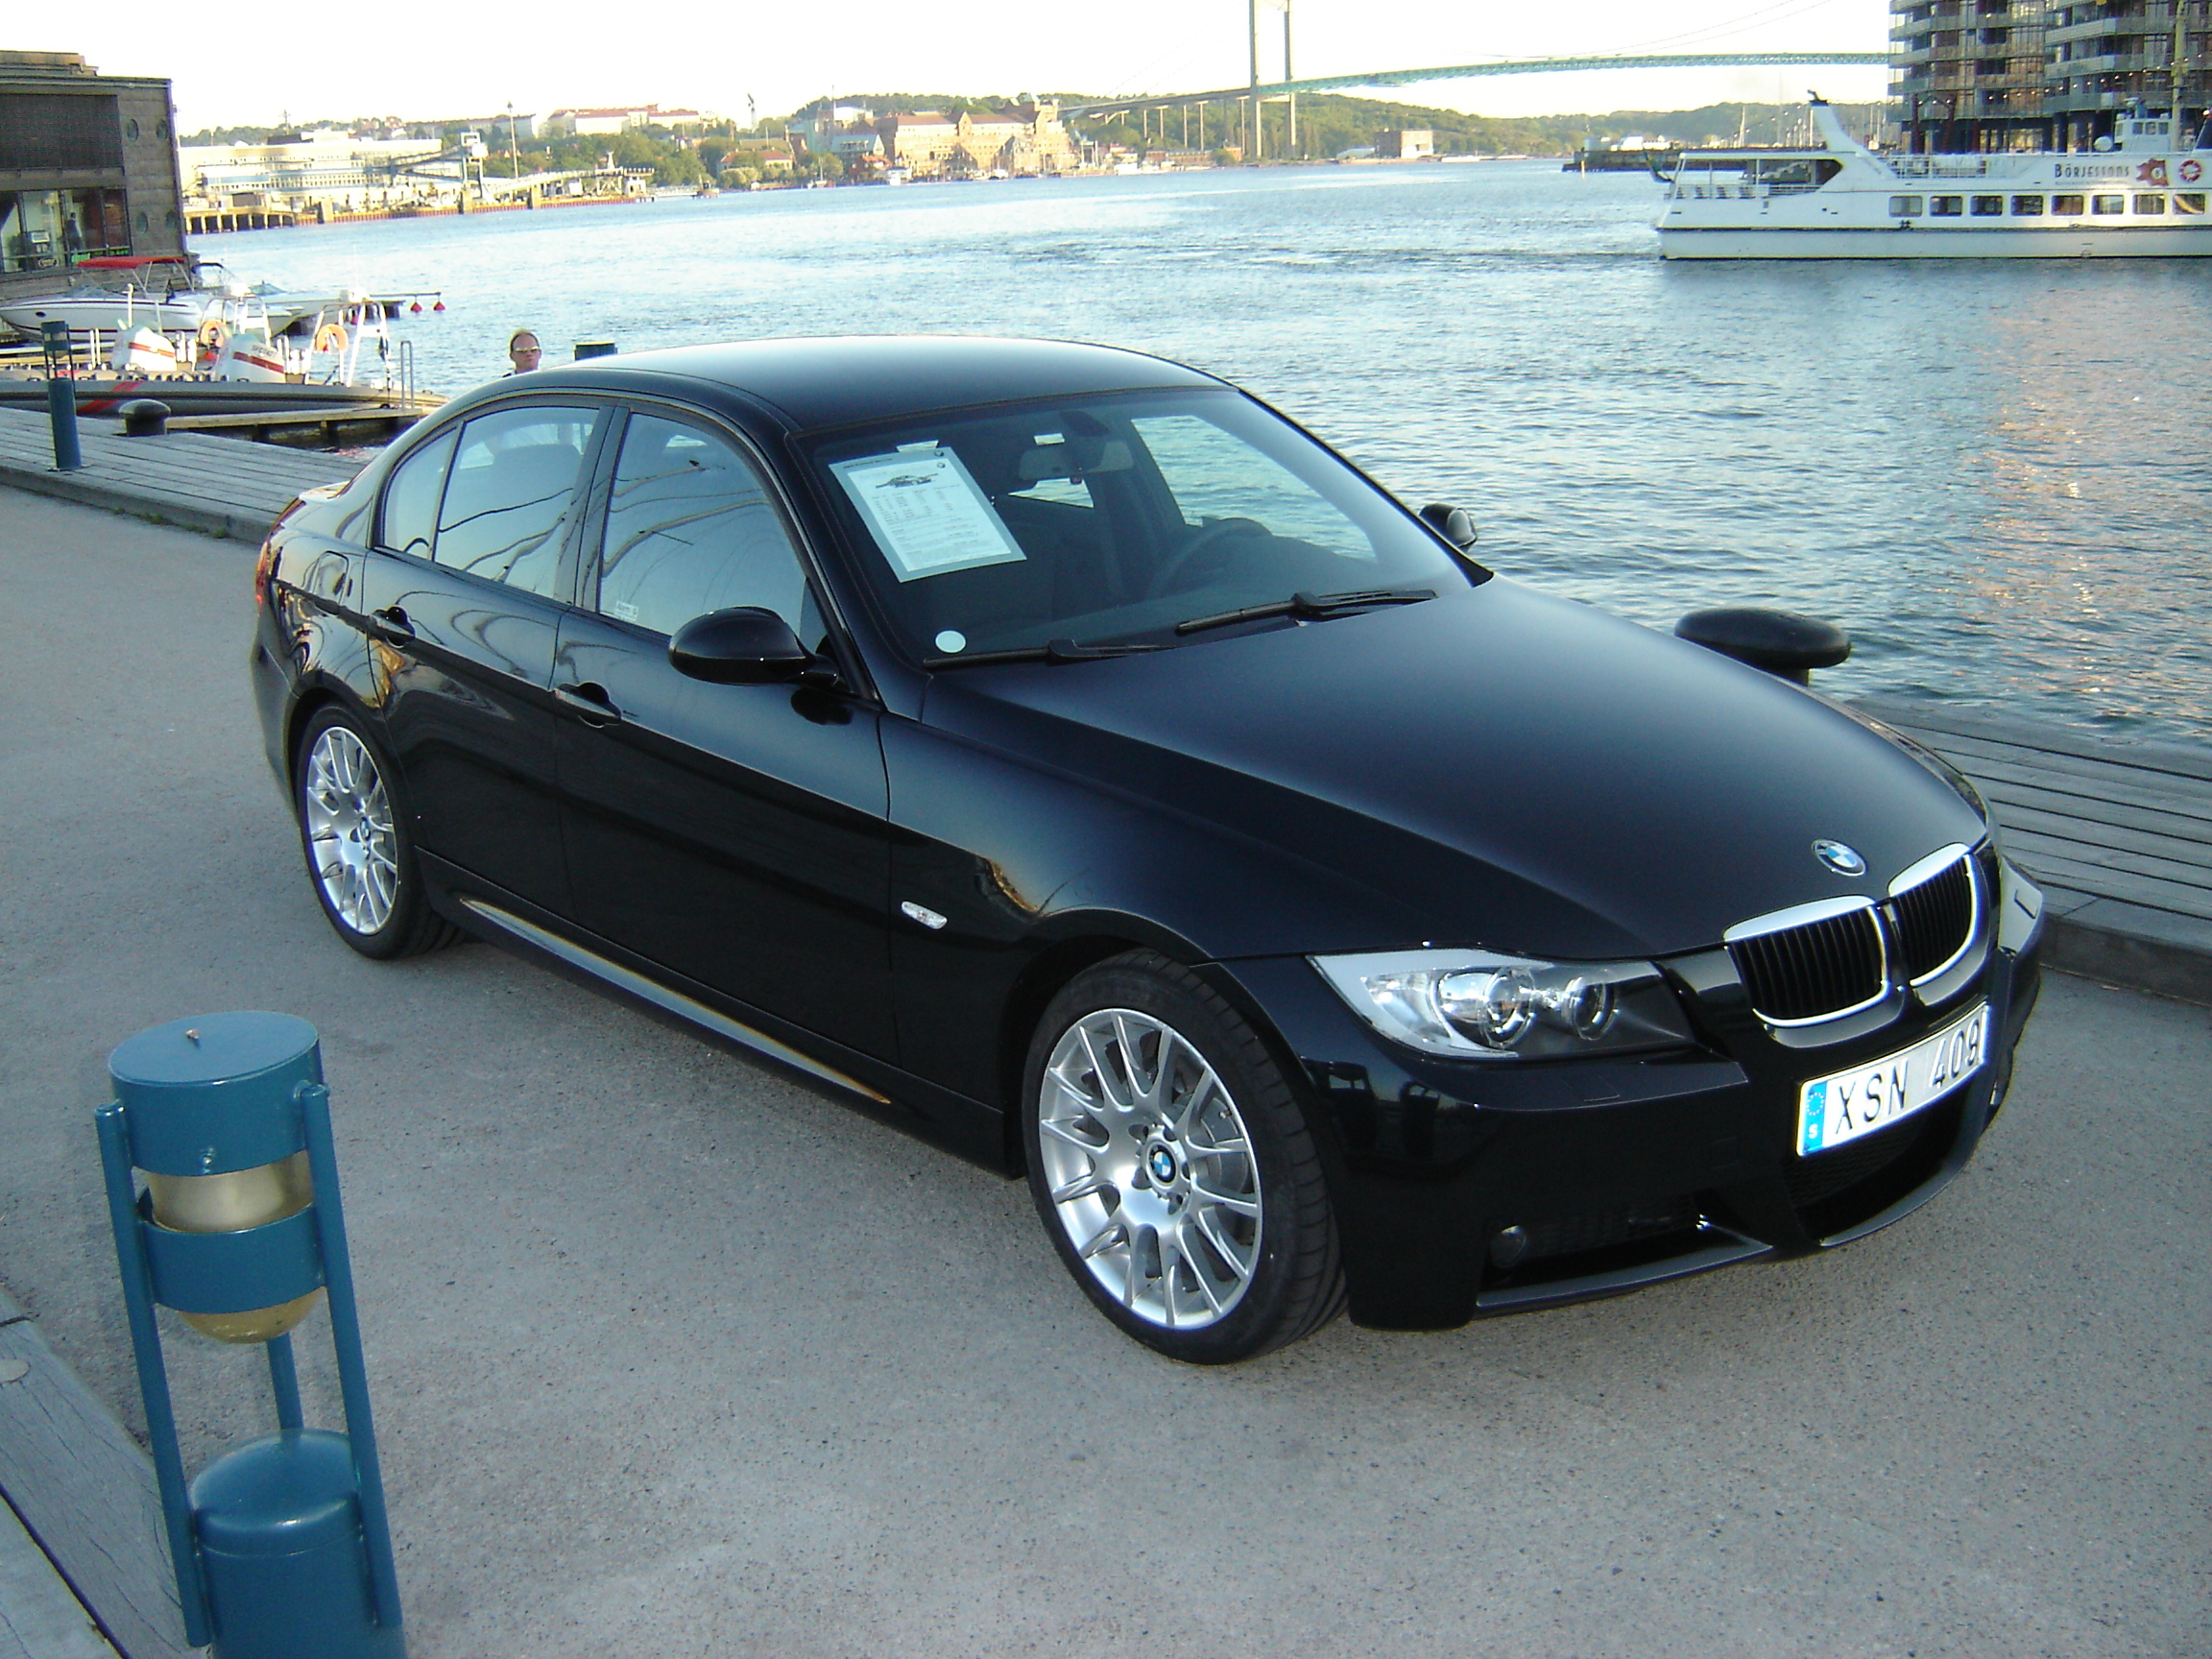 BMW 320 Si | Flickr - Photo Sharing!